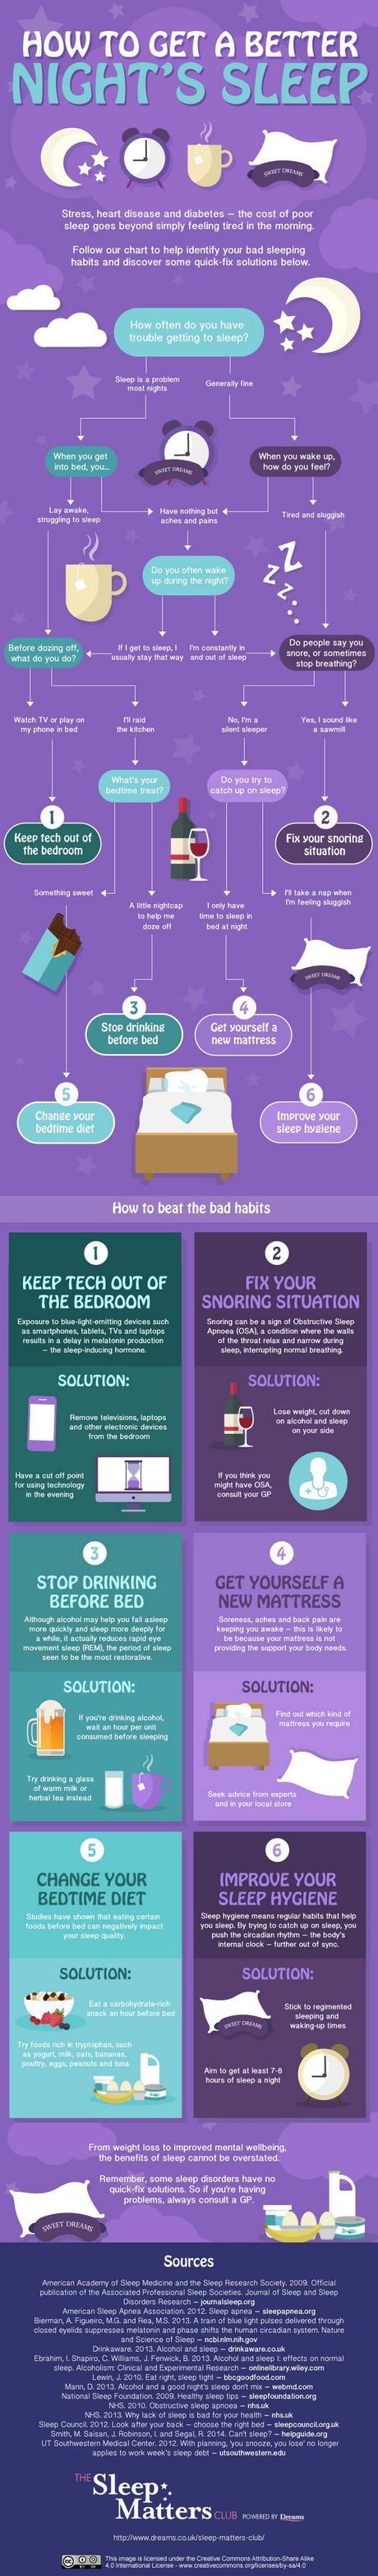 Better-Sleep-habit-infographic